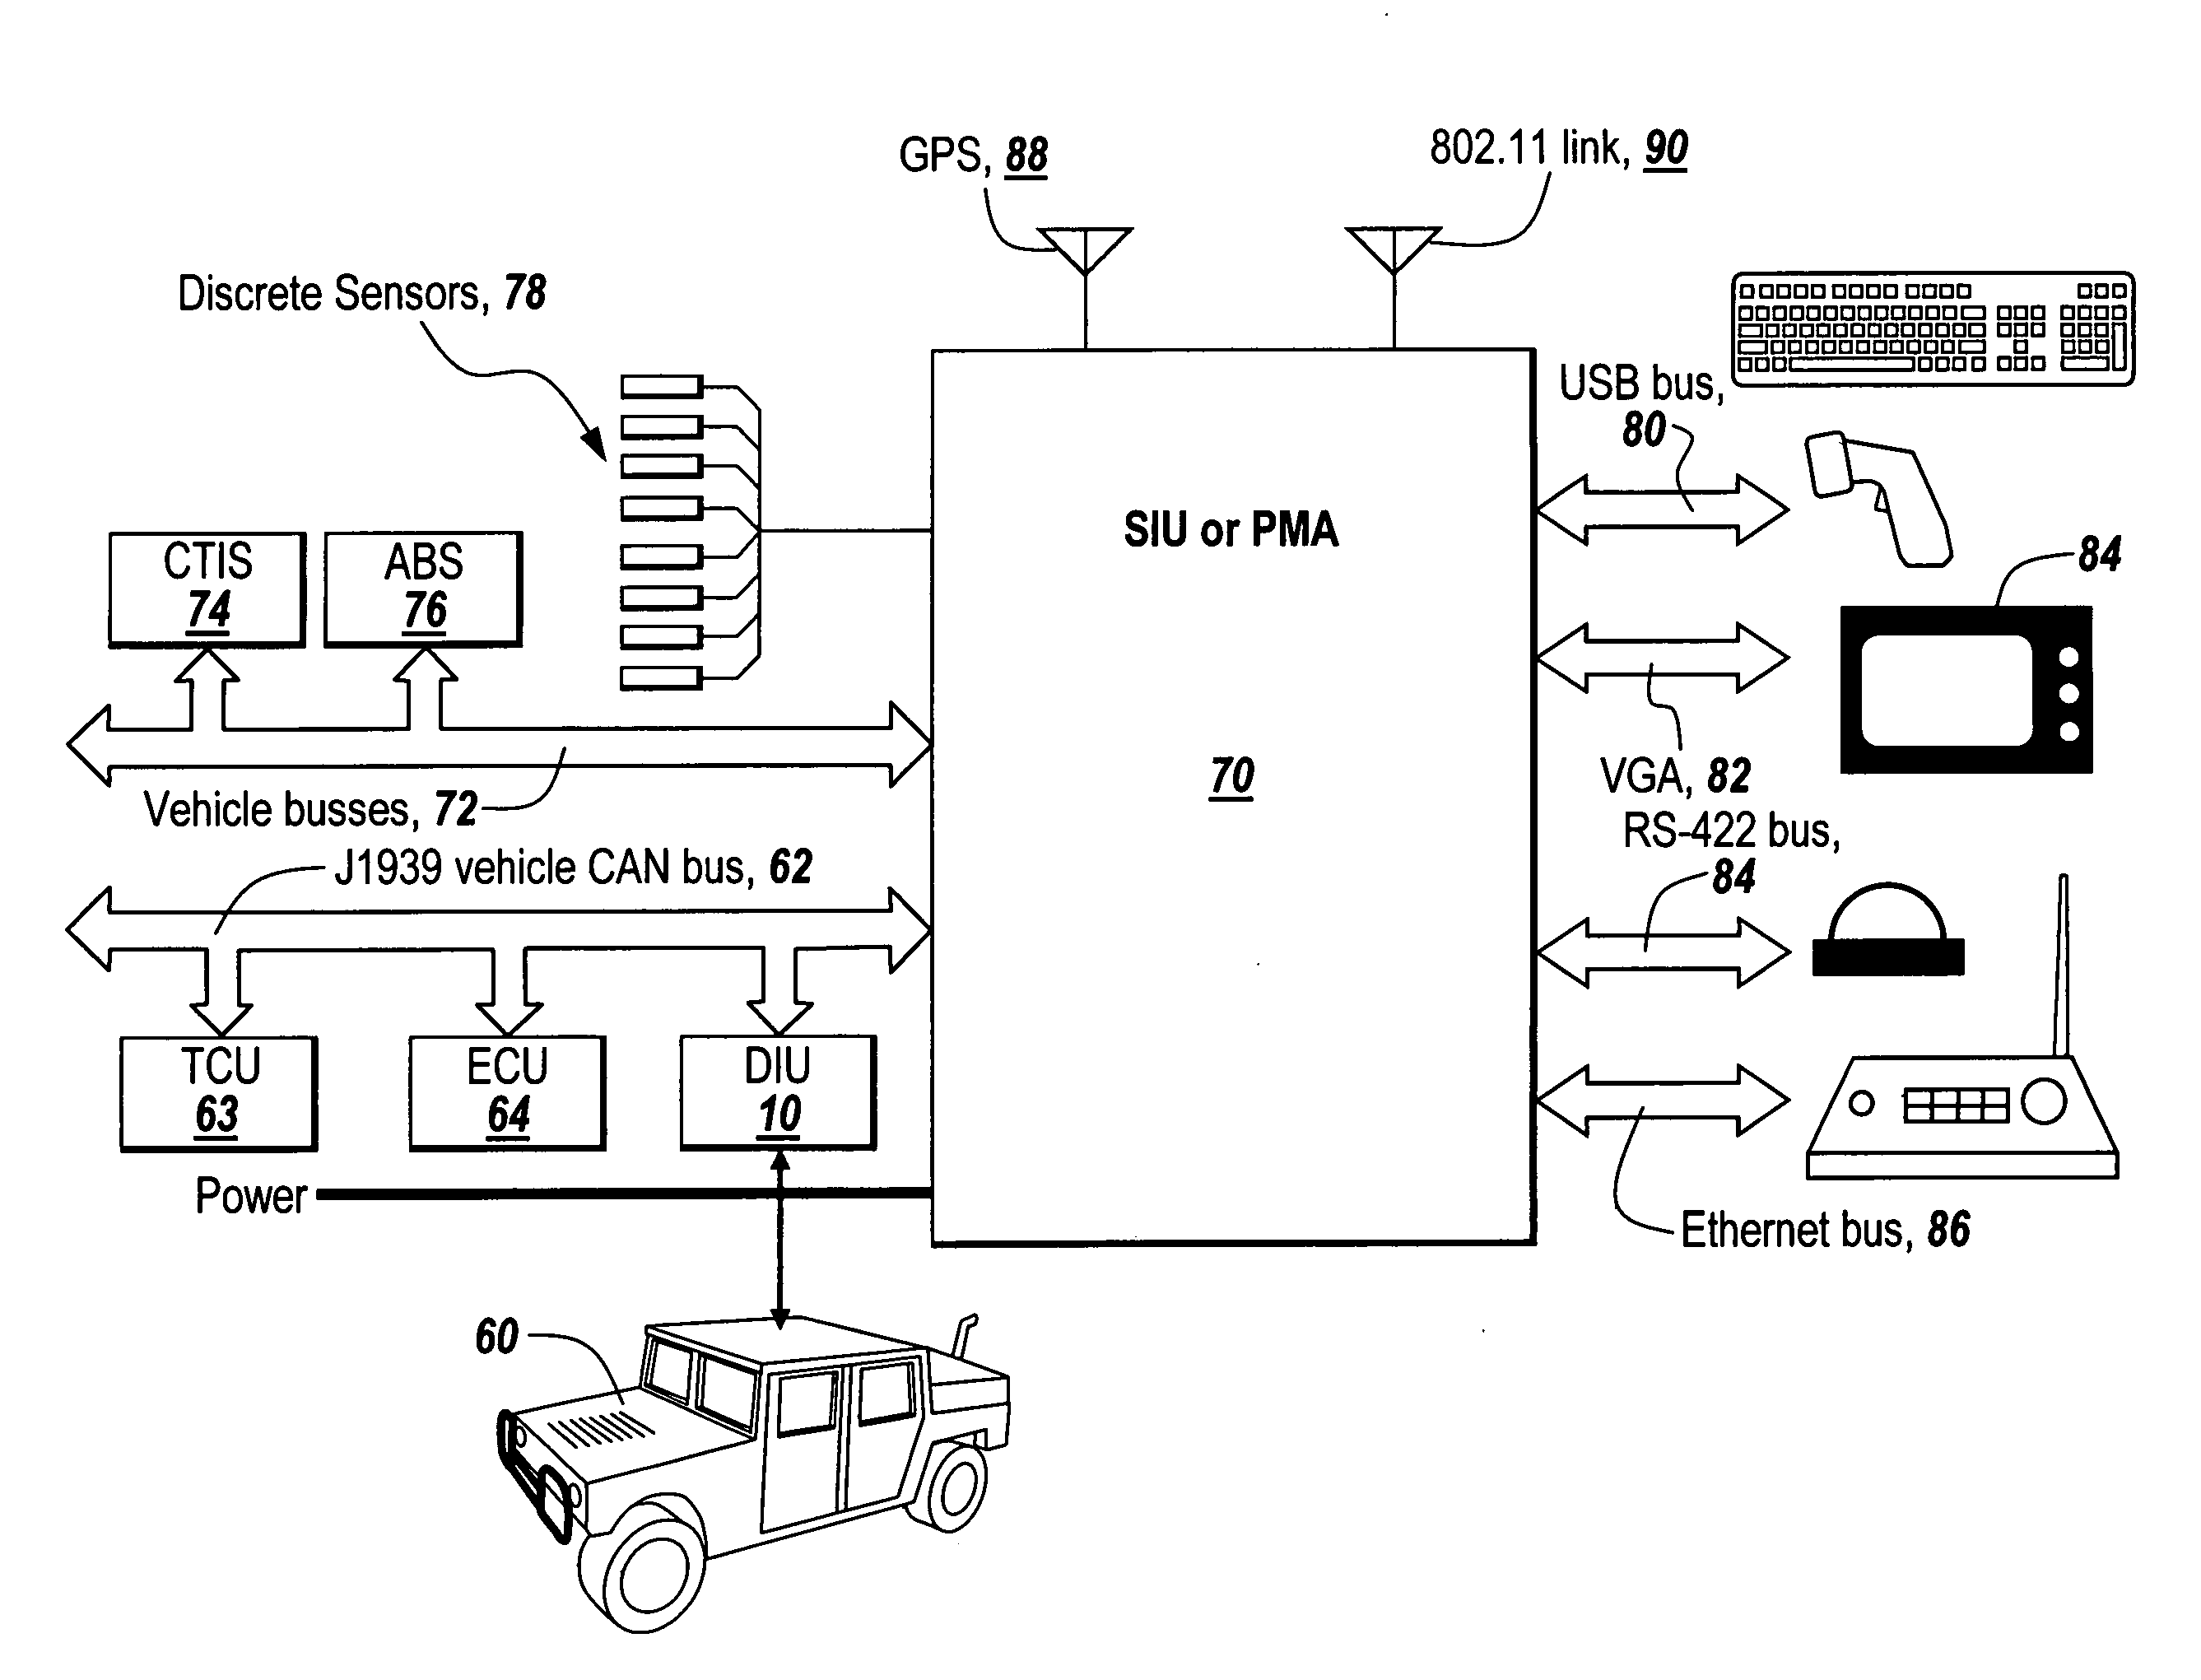 Diagnostic connector assembly (DCA) interface unit (DIU)